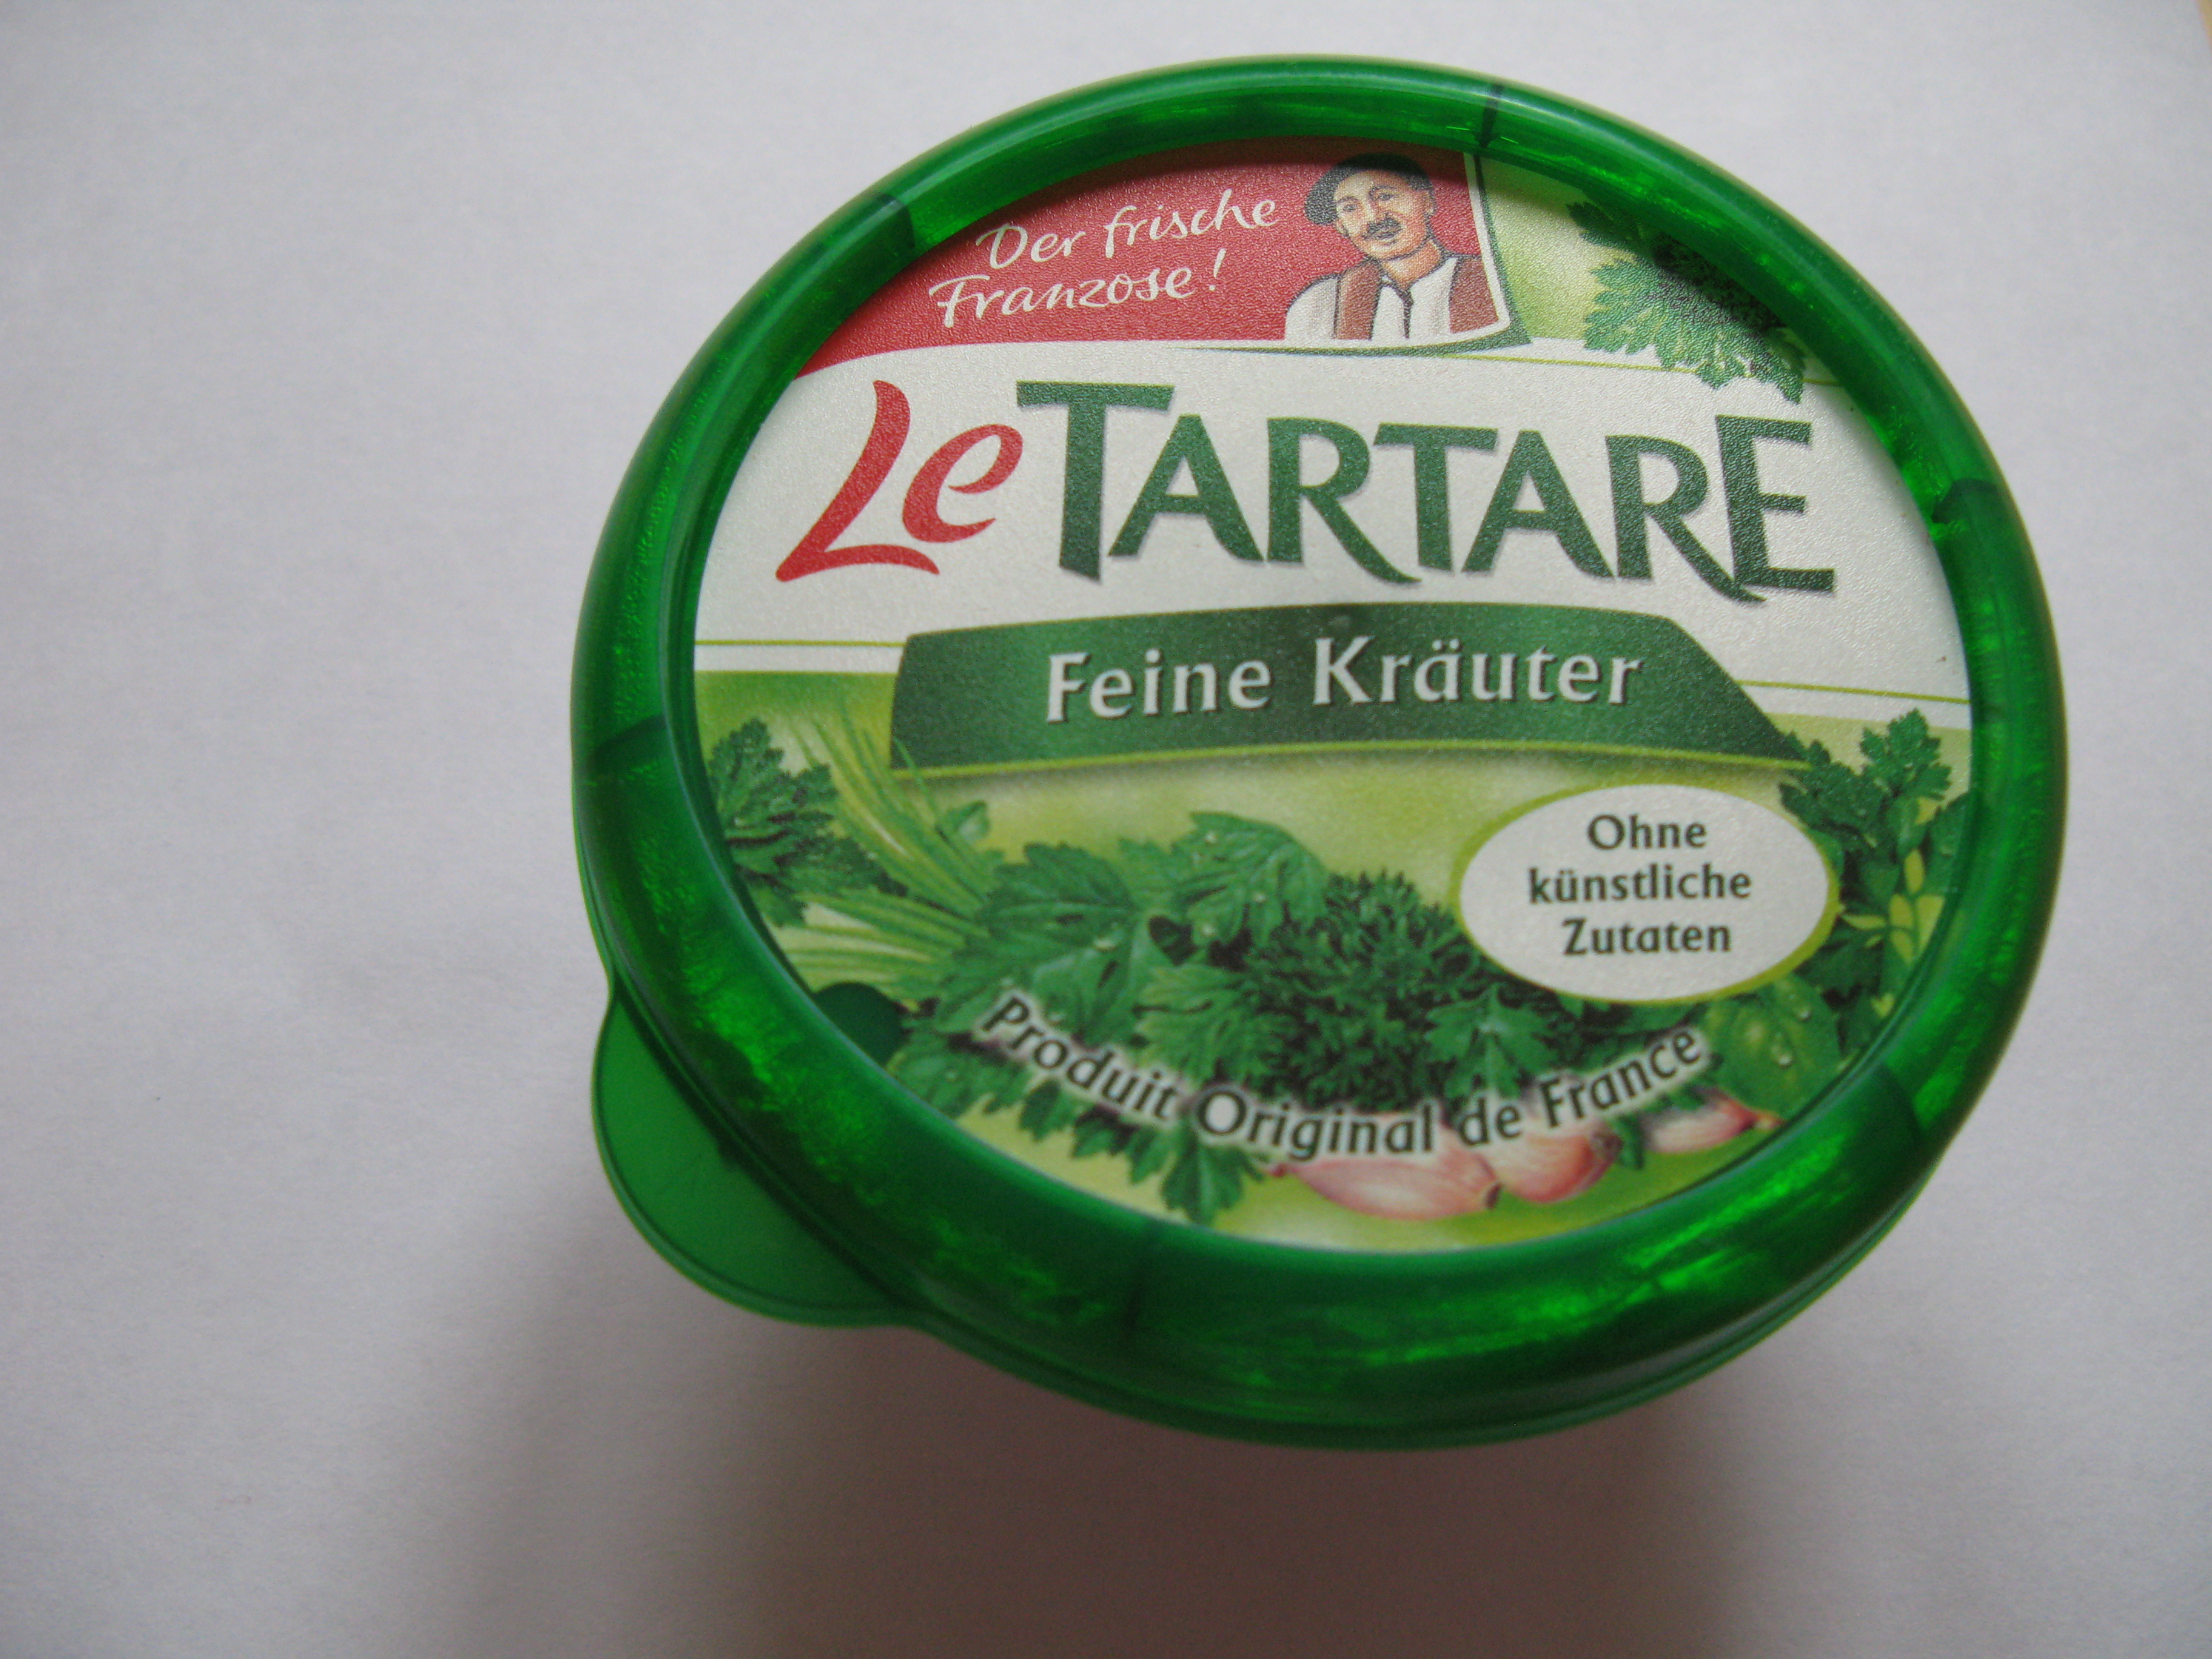 Le Tartare (2013).JPG